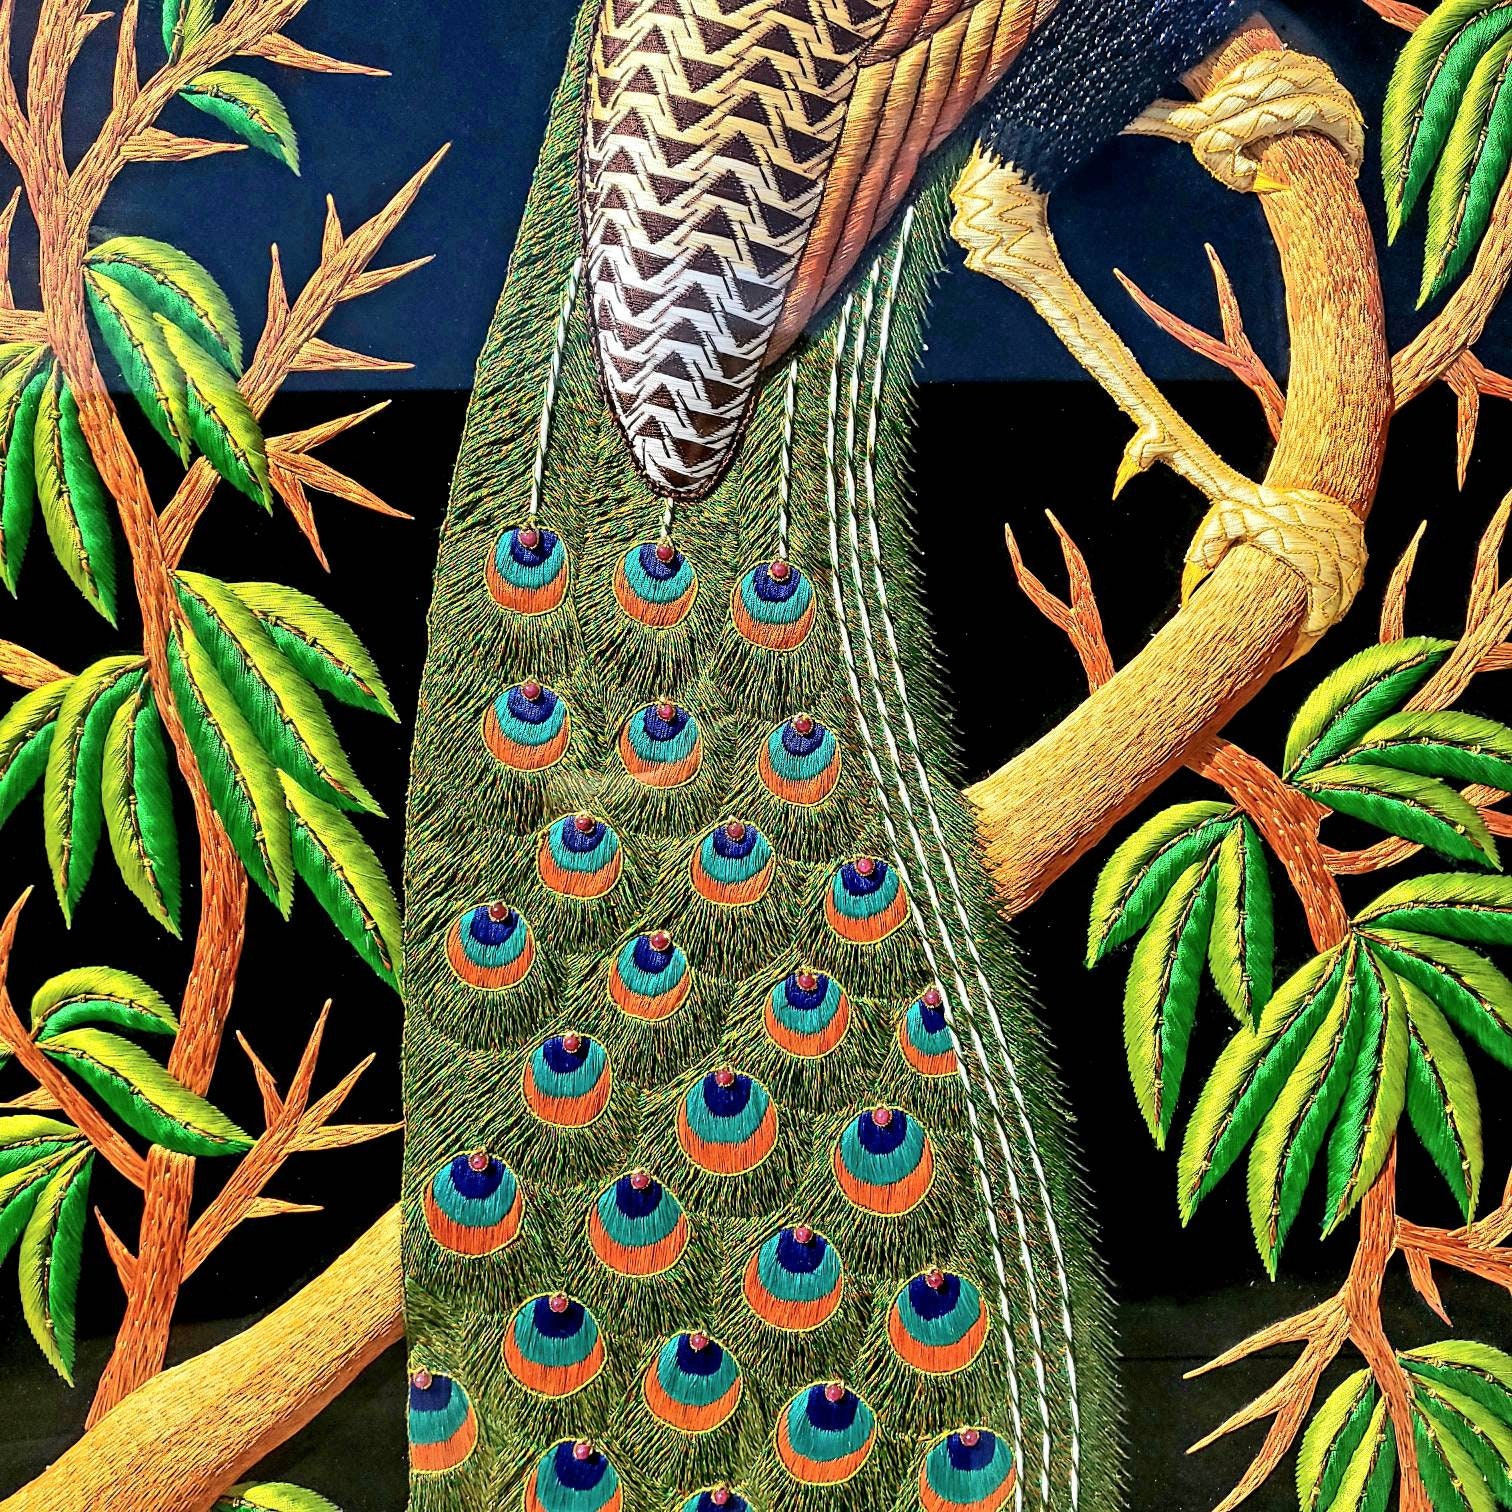 Peacock Wall Art Decorative Panel Jewel Art Tapestry, 35W X 47H